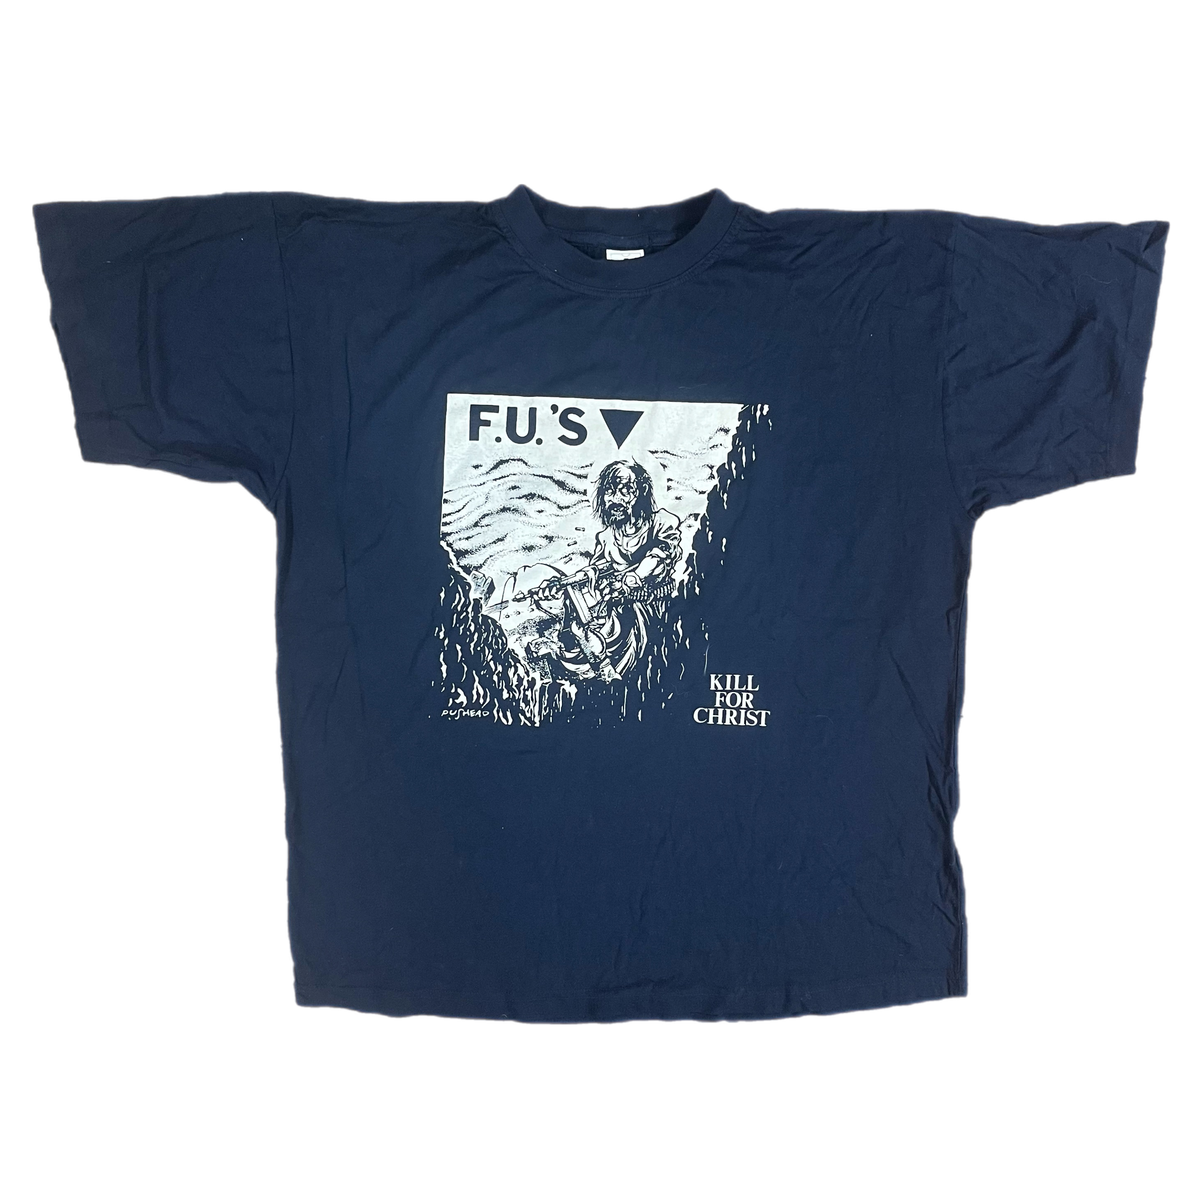 Vintage F.U.&#39;s &quot;Kill For Christ&quot; Pushead T-Shirt